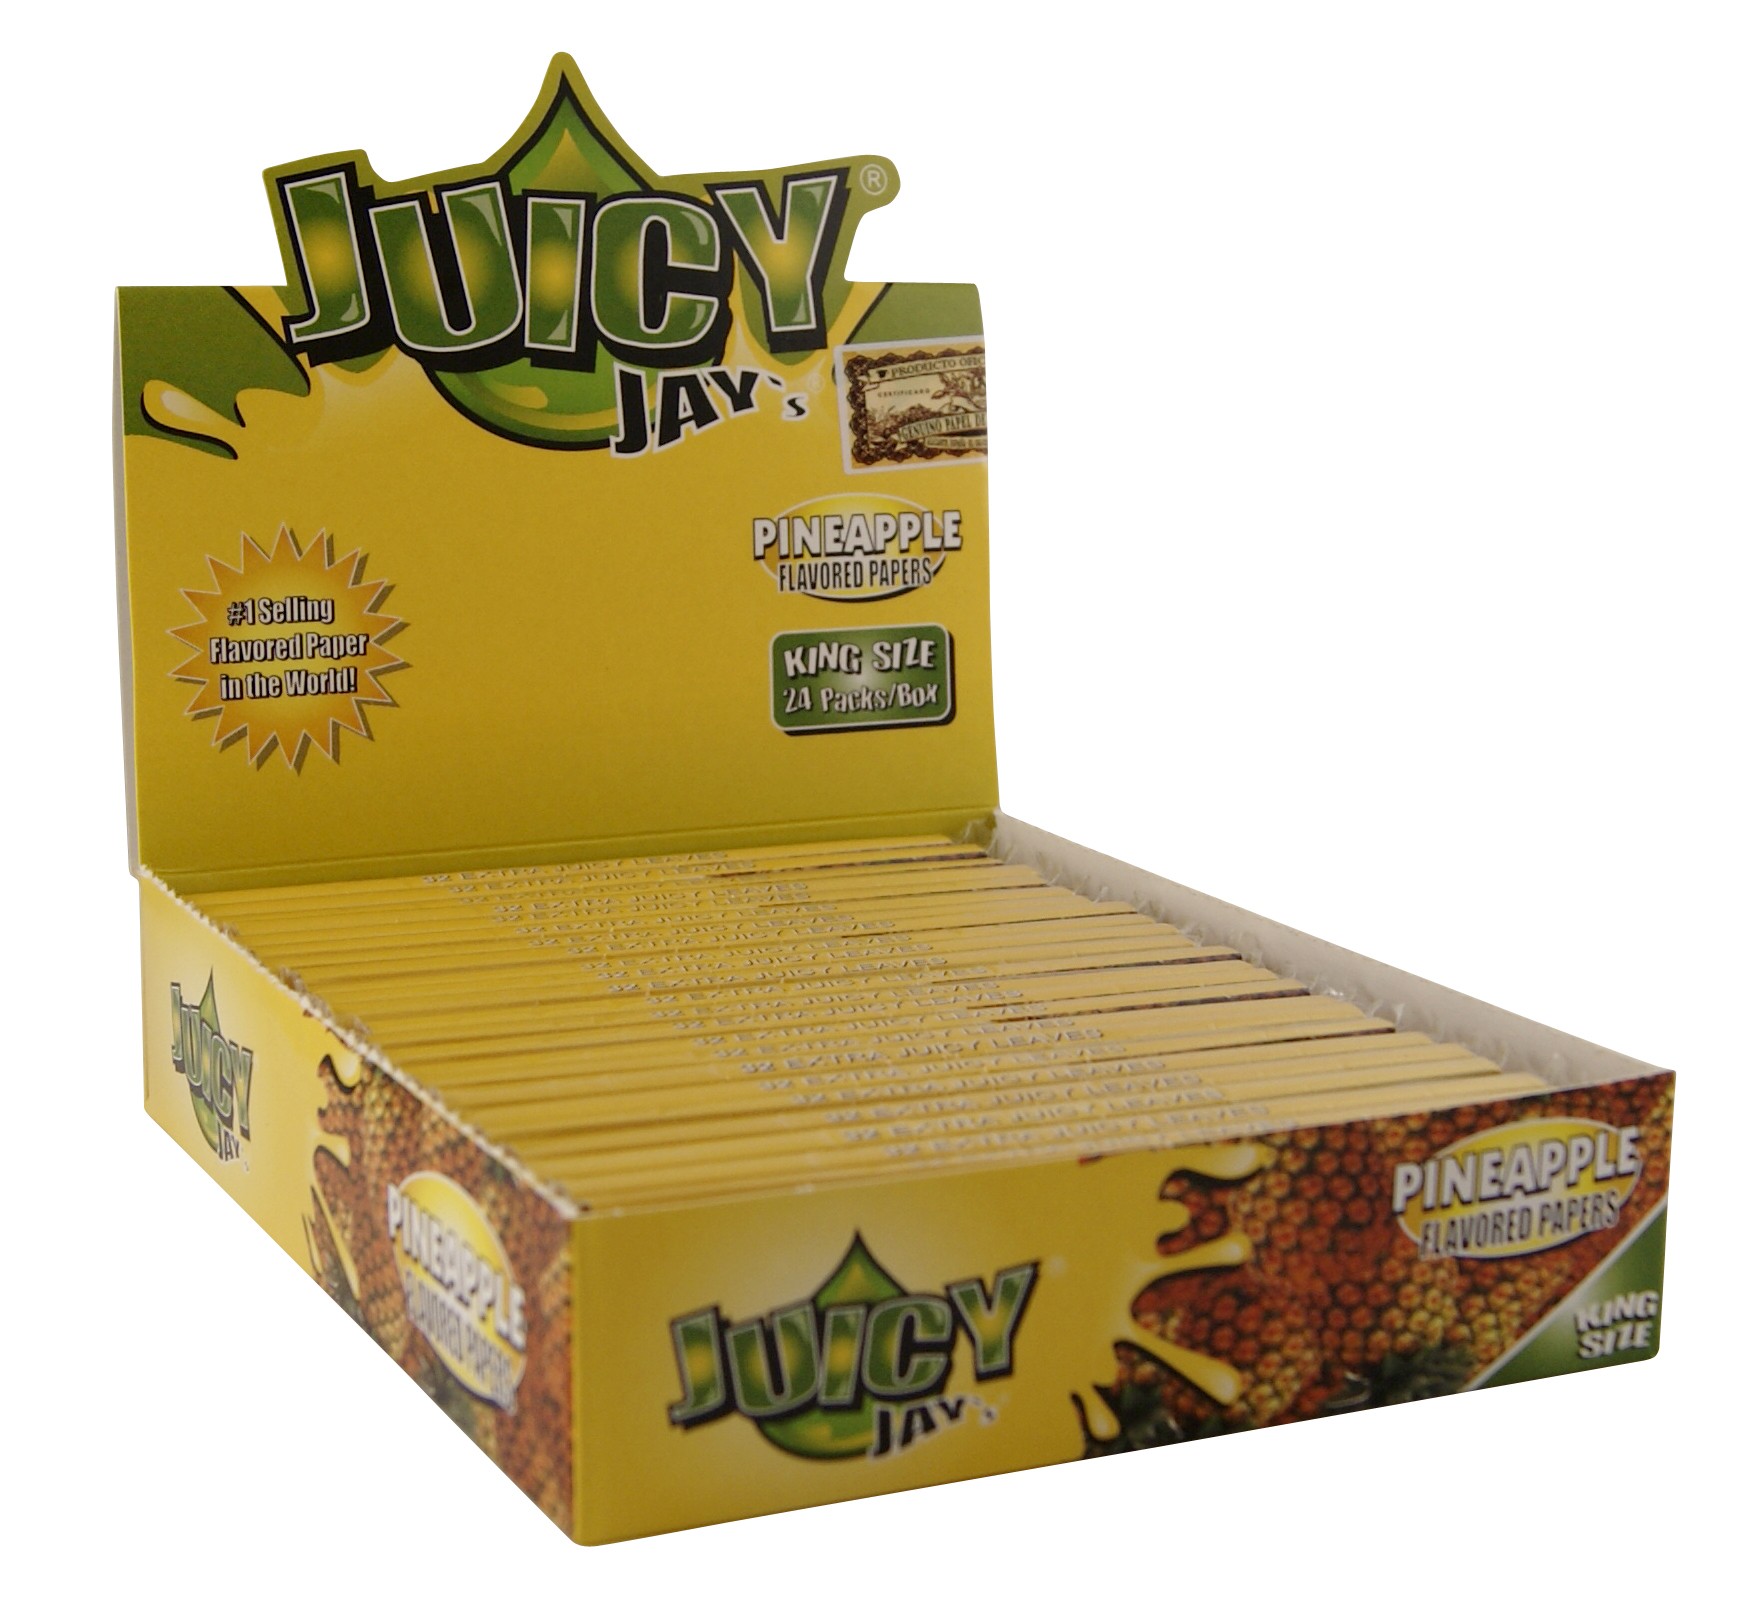 Juicy Jay´s 1 ¼ - Pineapple